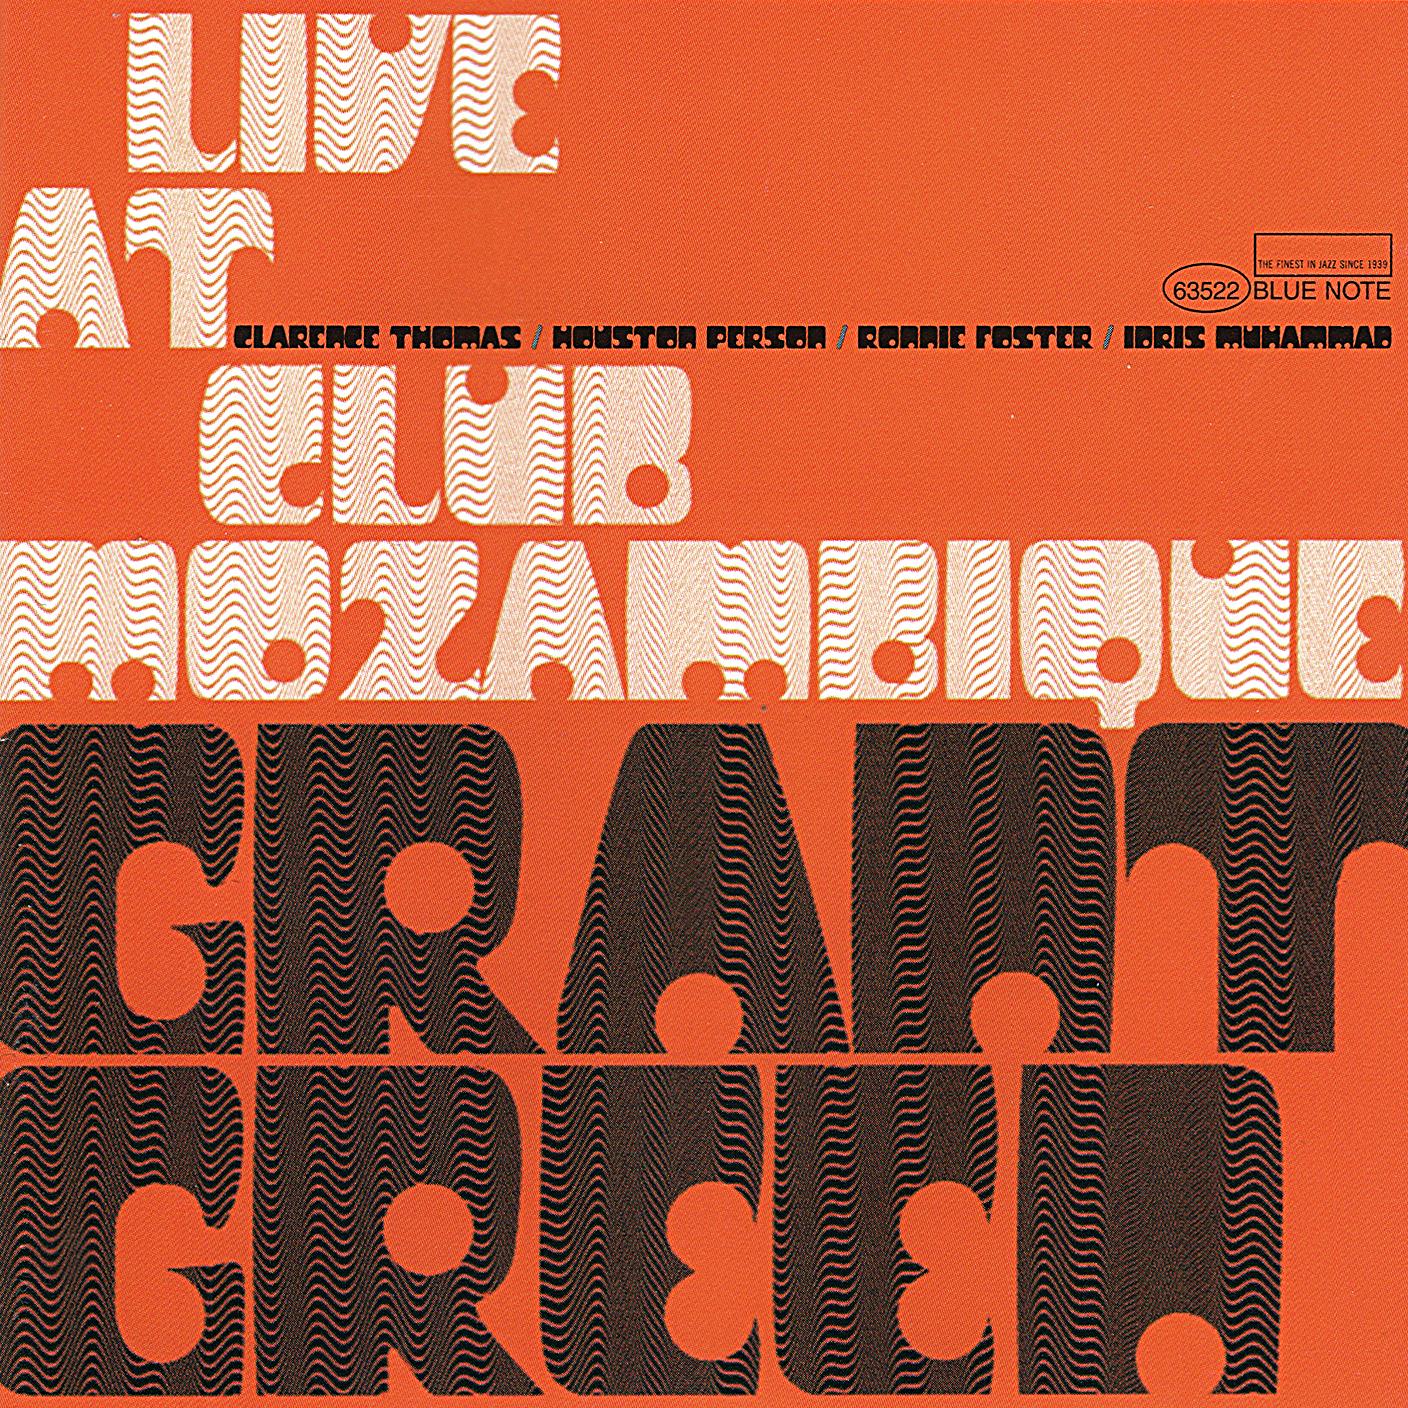 Grant Green Live At Club Mozambique